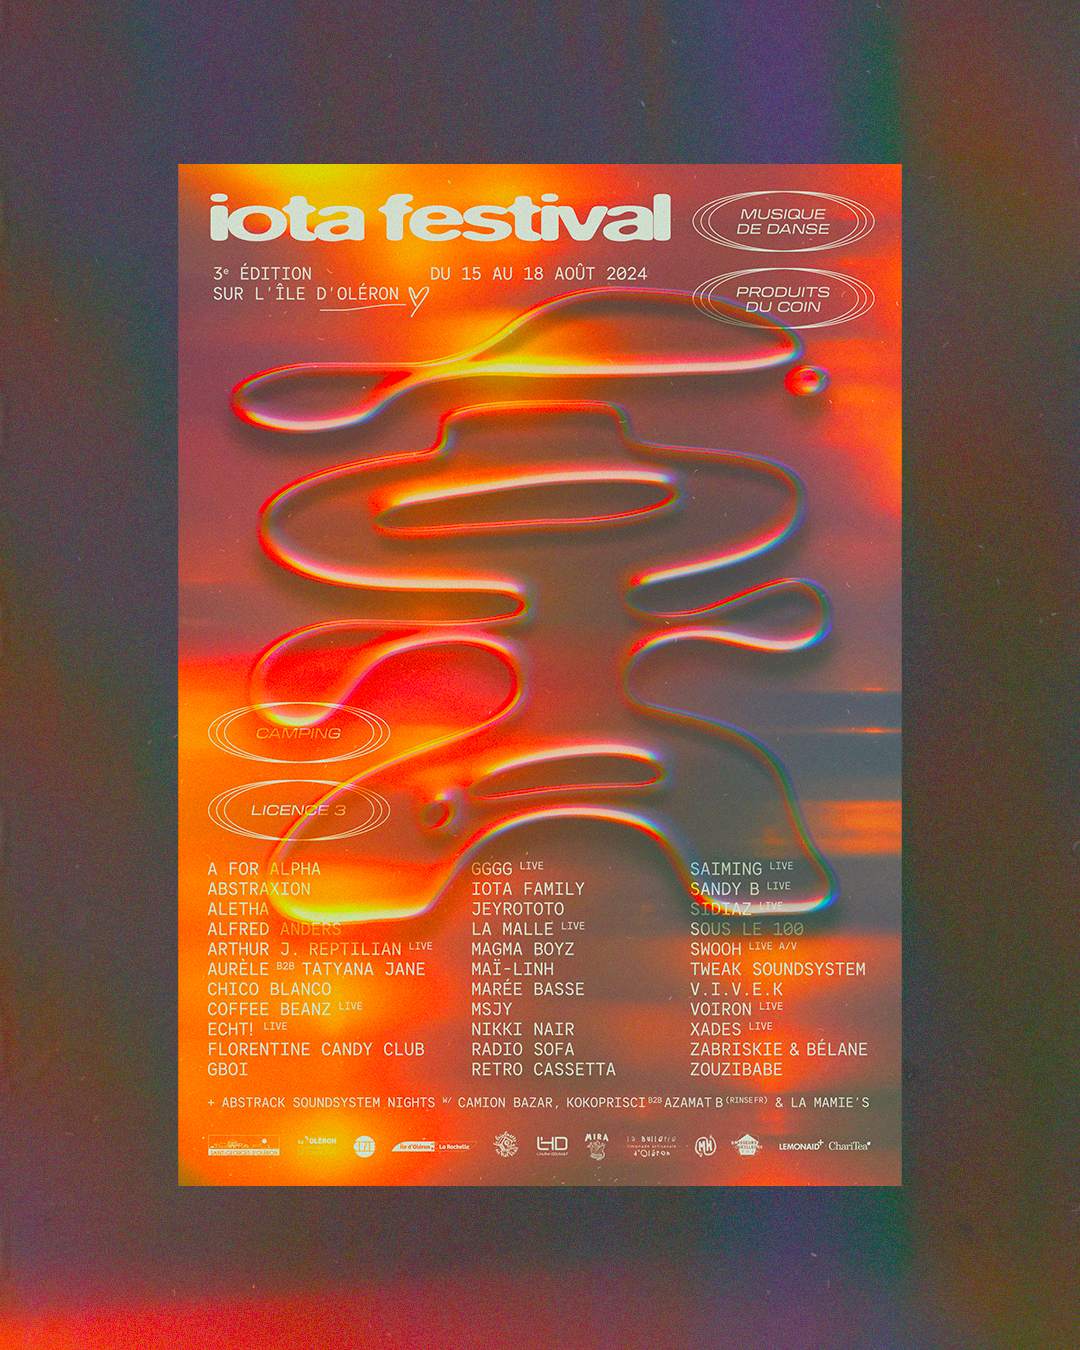 IOTA Festival - Página frontal